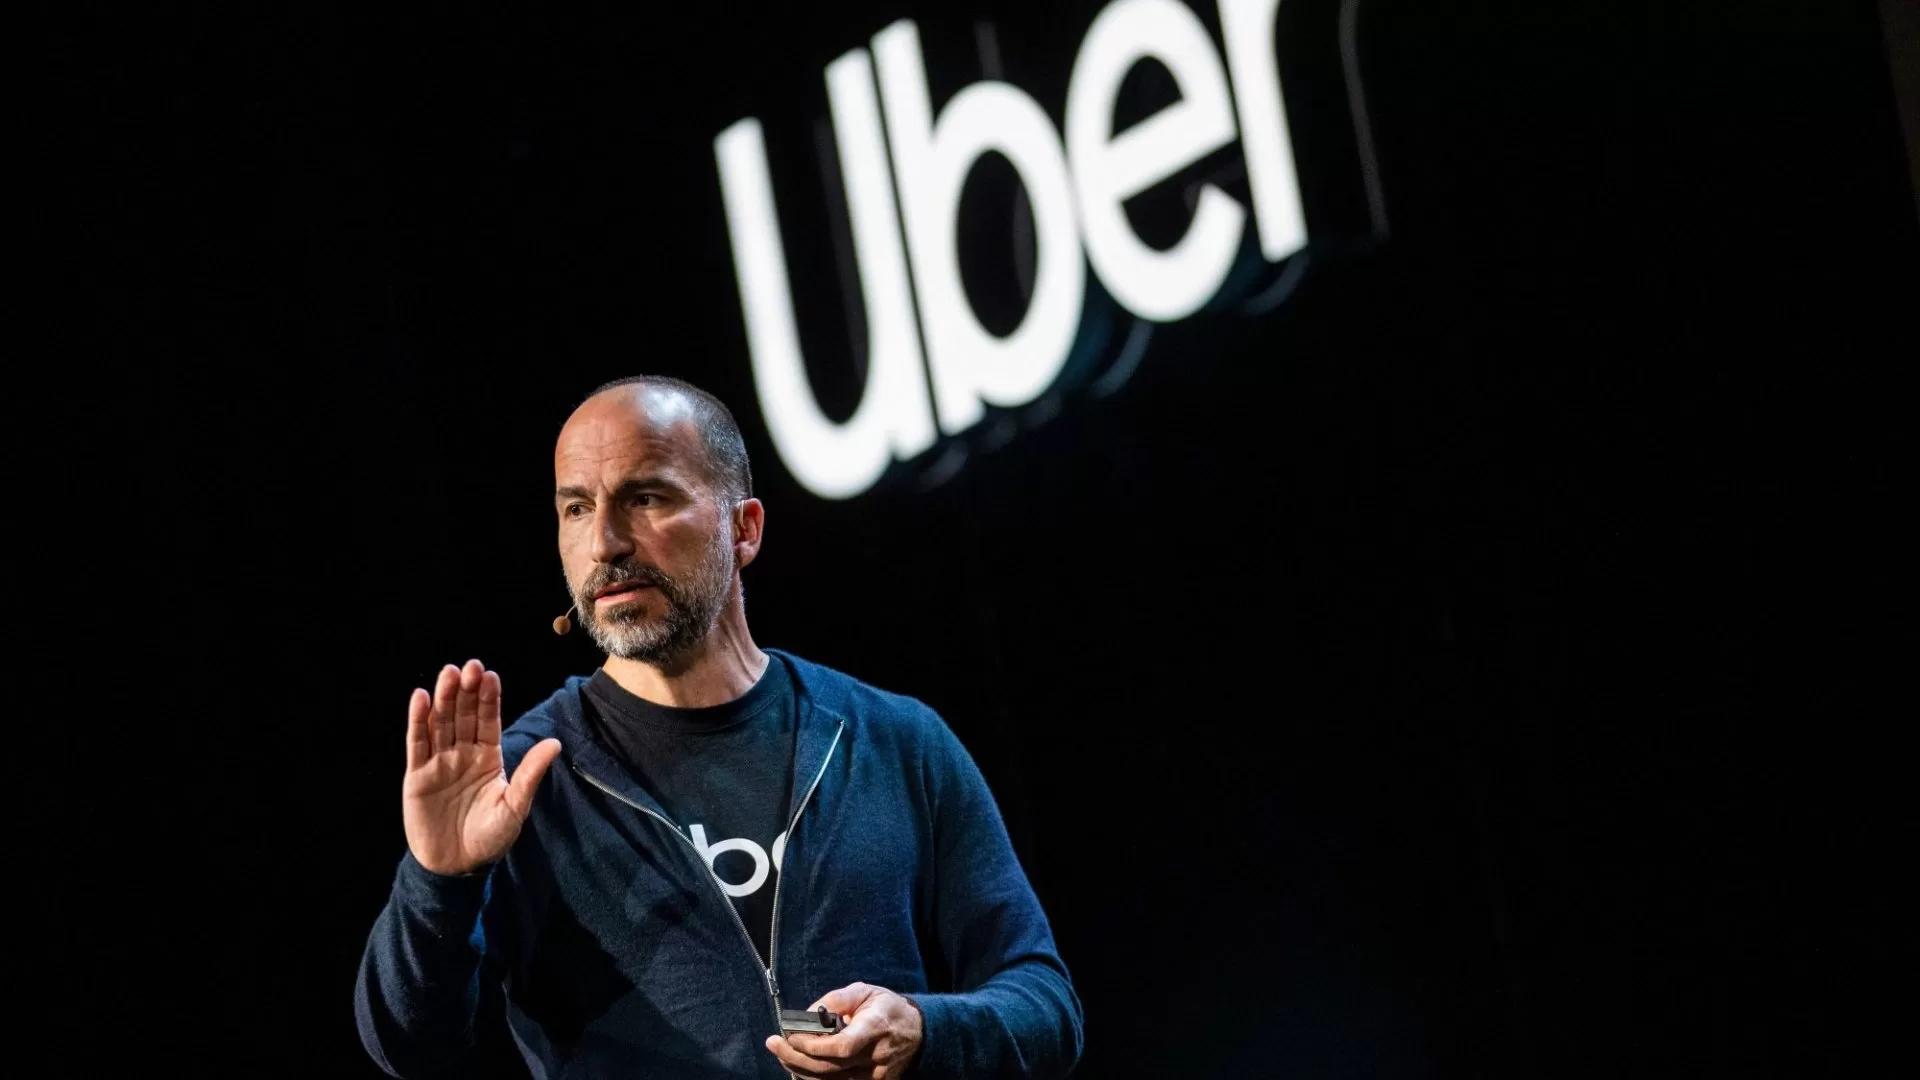 Uber CEO Dara Khosrowashahi Discusses Potential for Bitcoin Payments